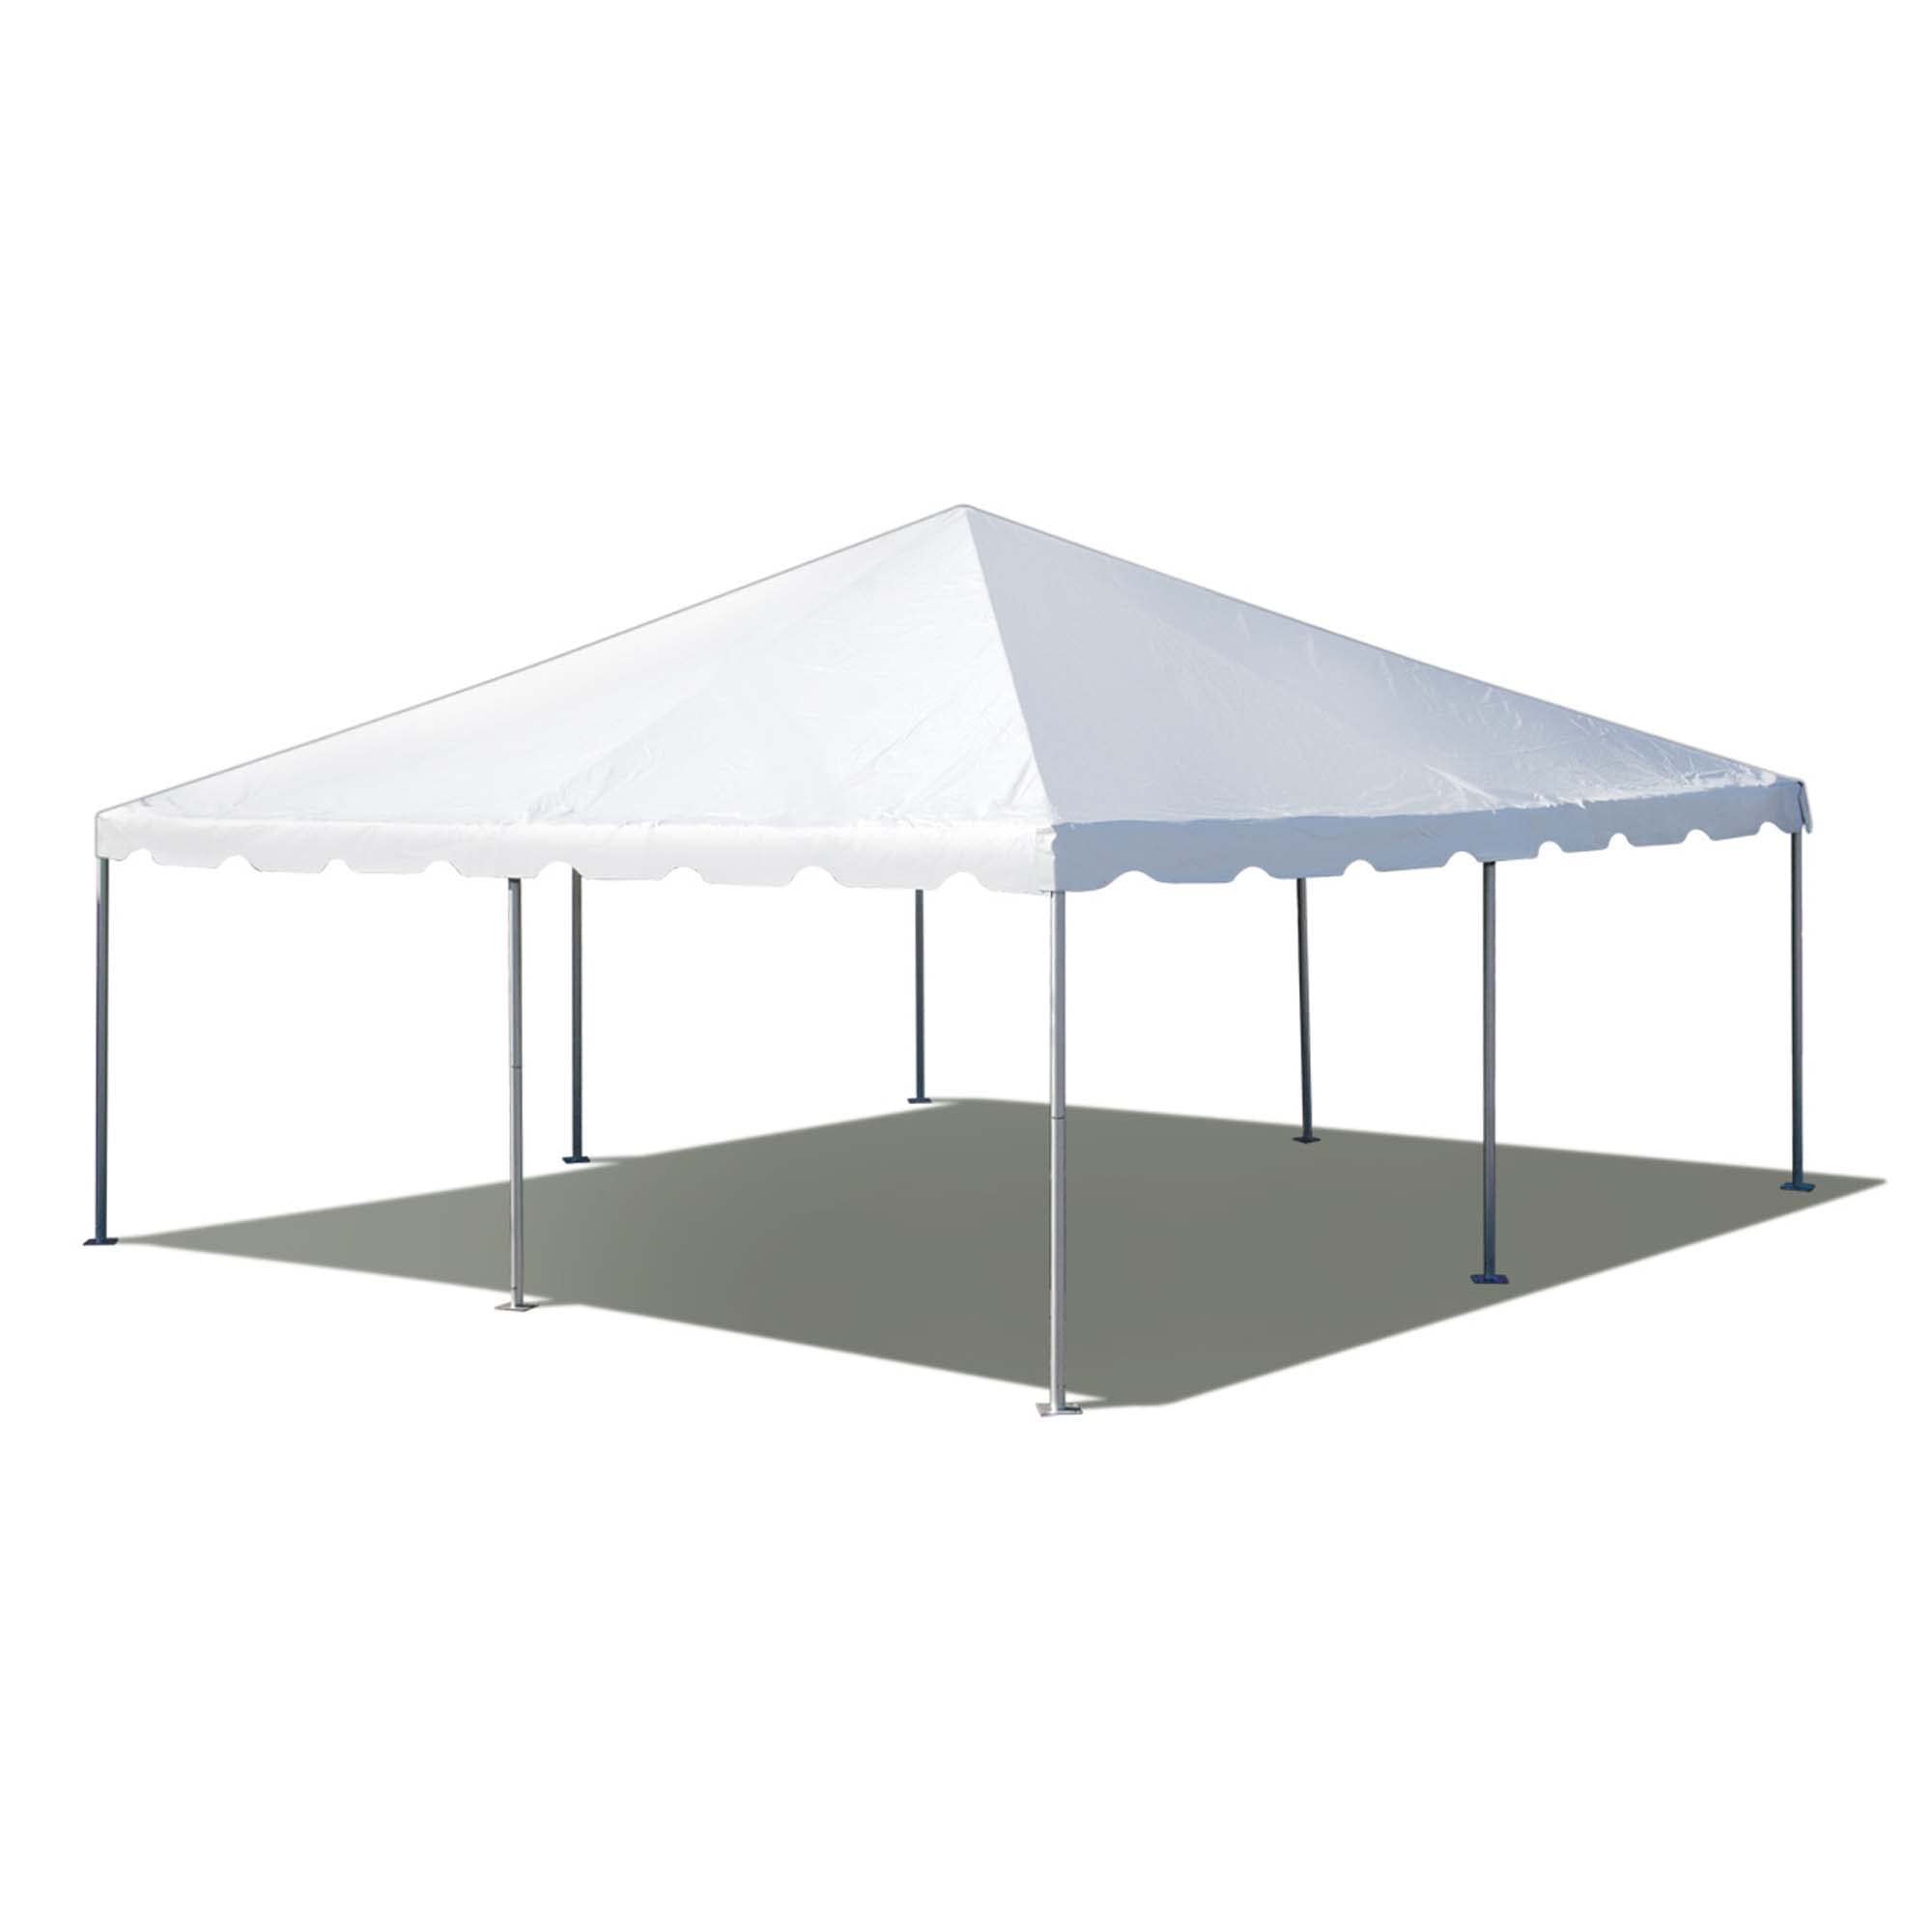 Corporate tent